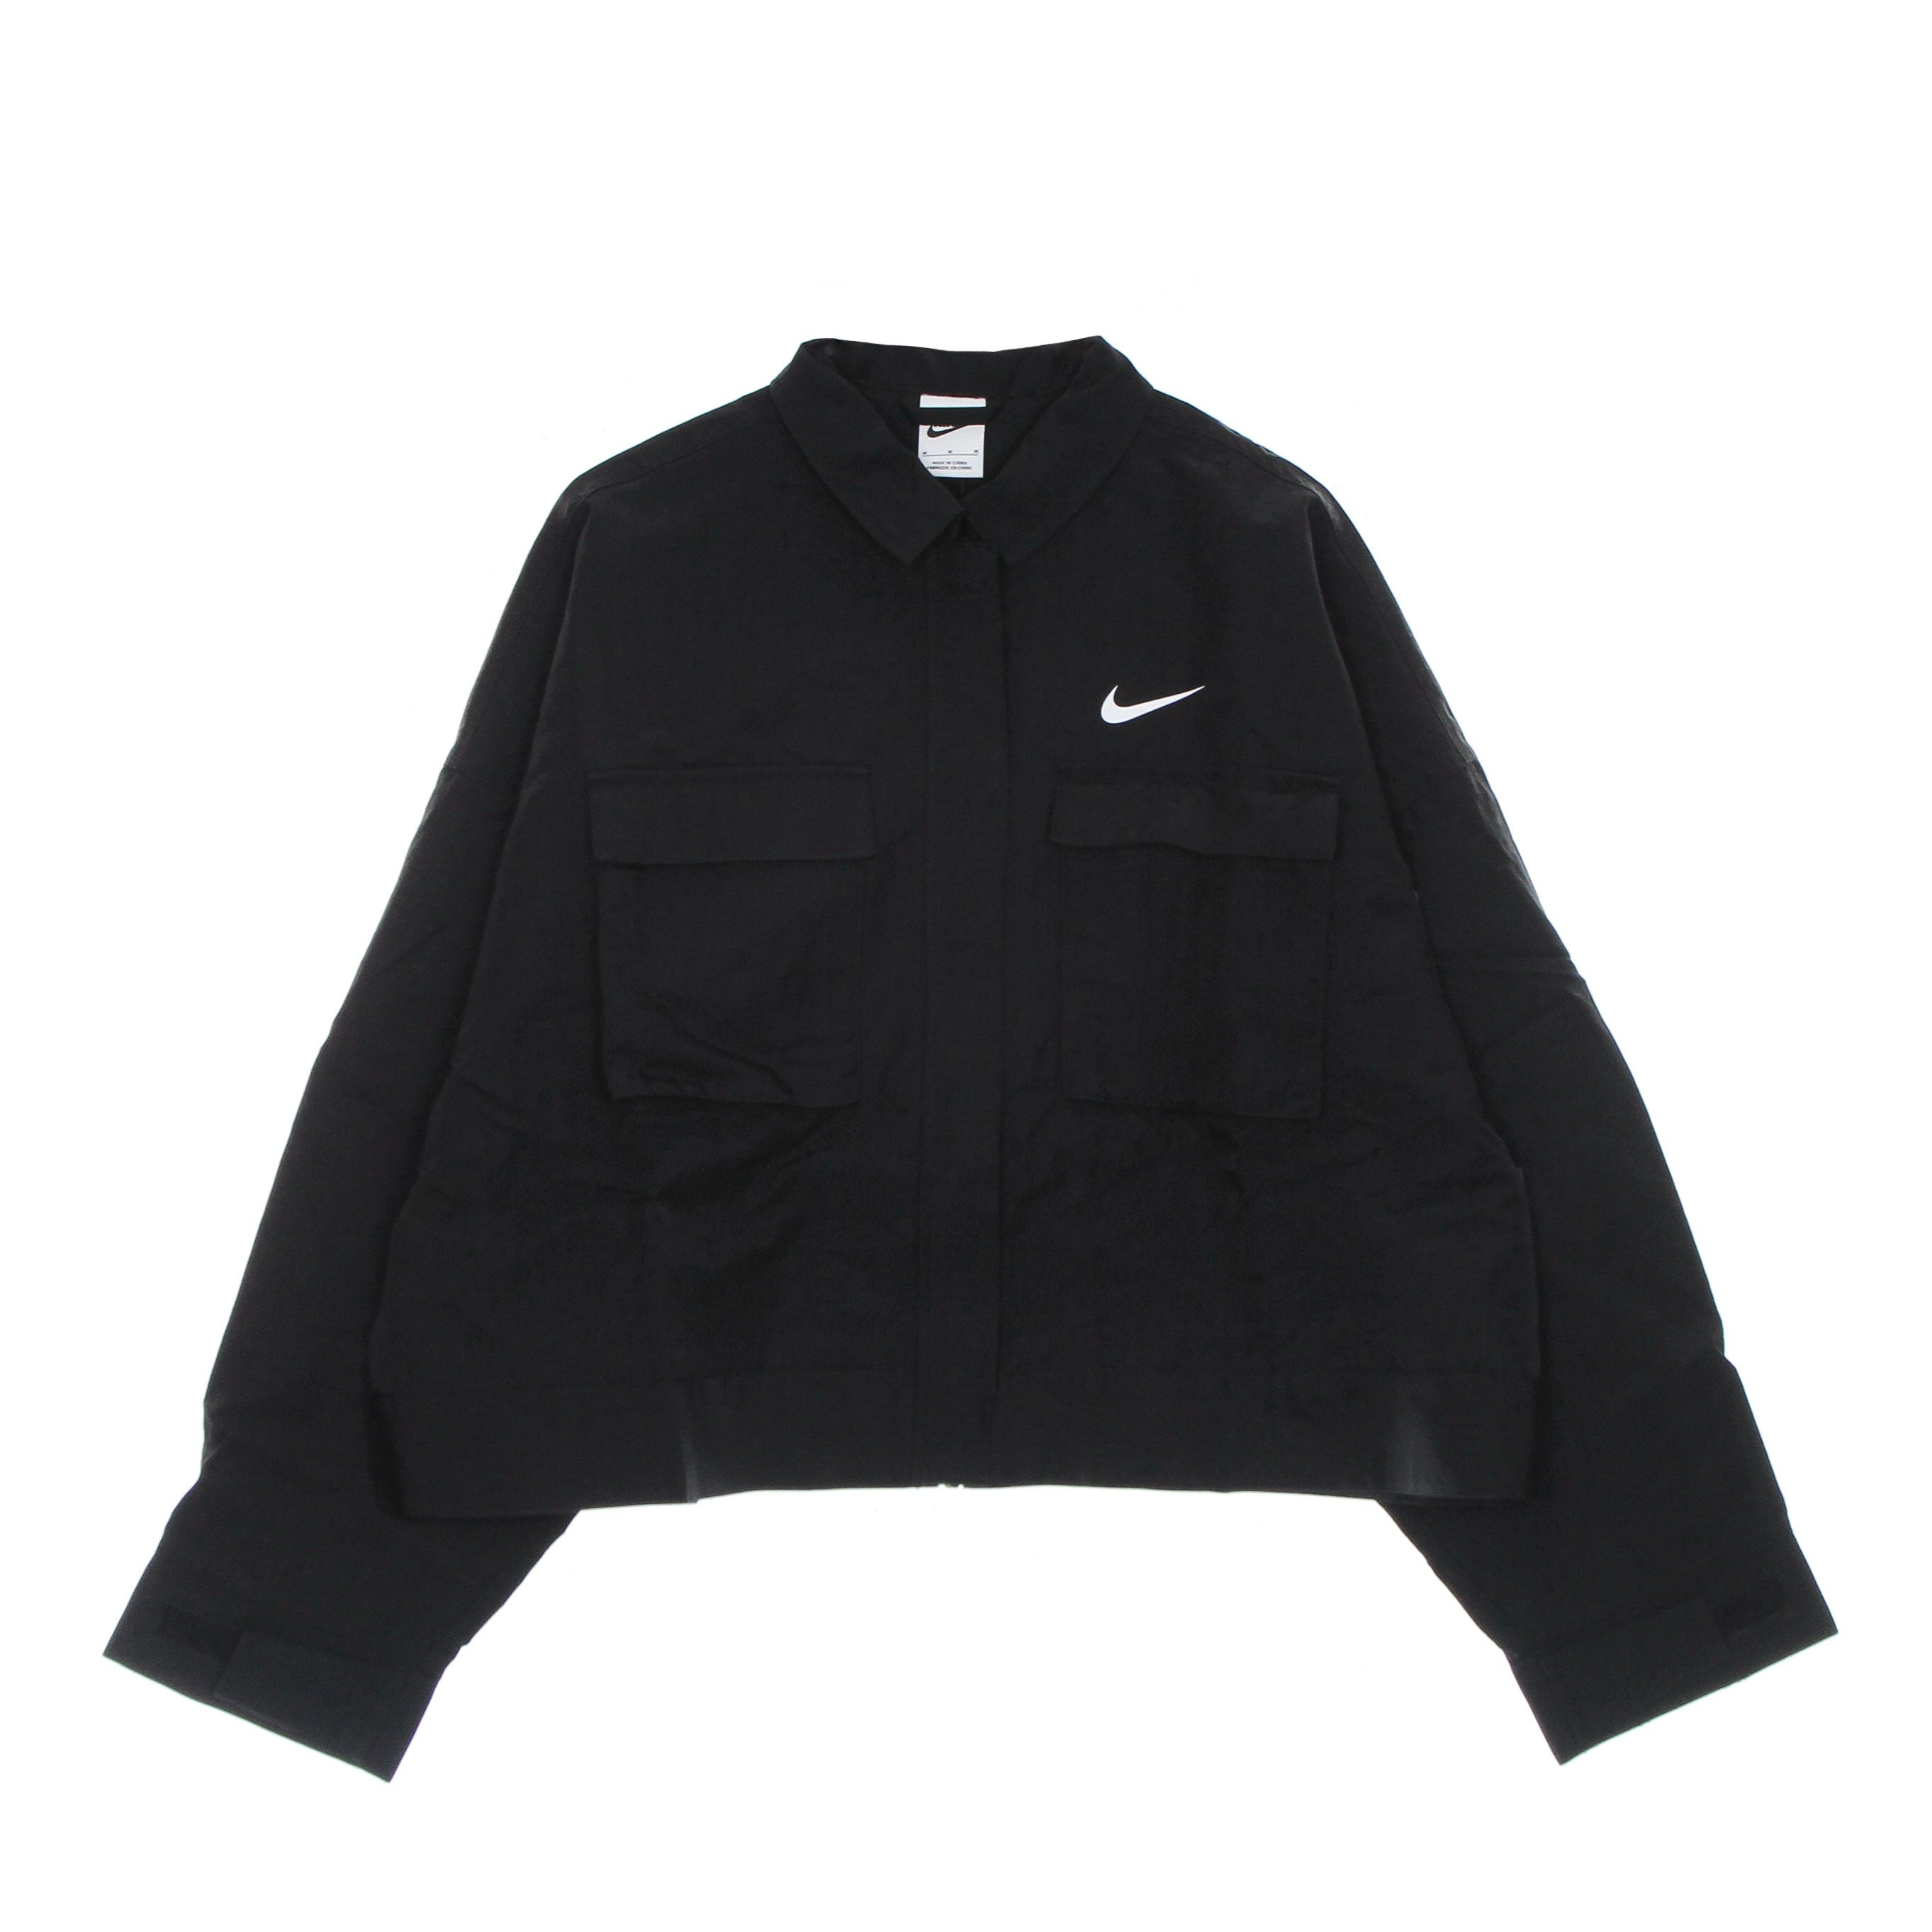 Nike, Giubbotto Donna Essential Woven Field Jacket, Black/white